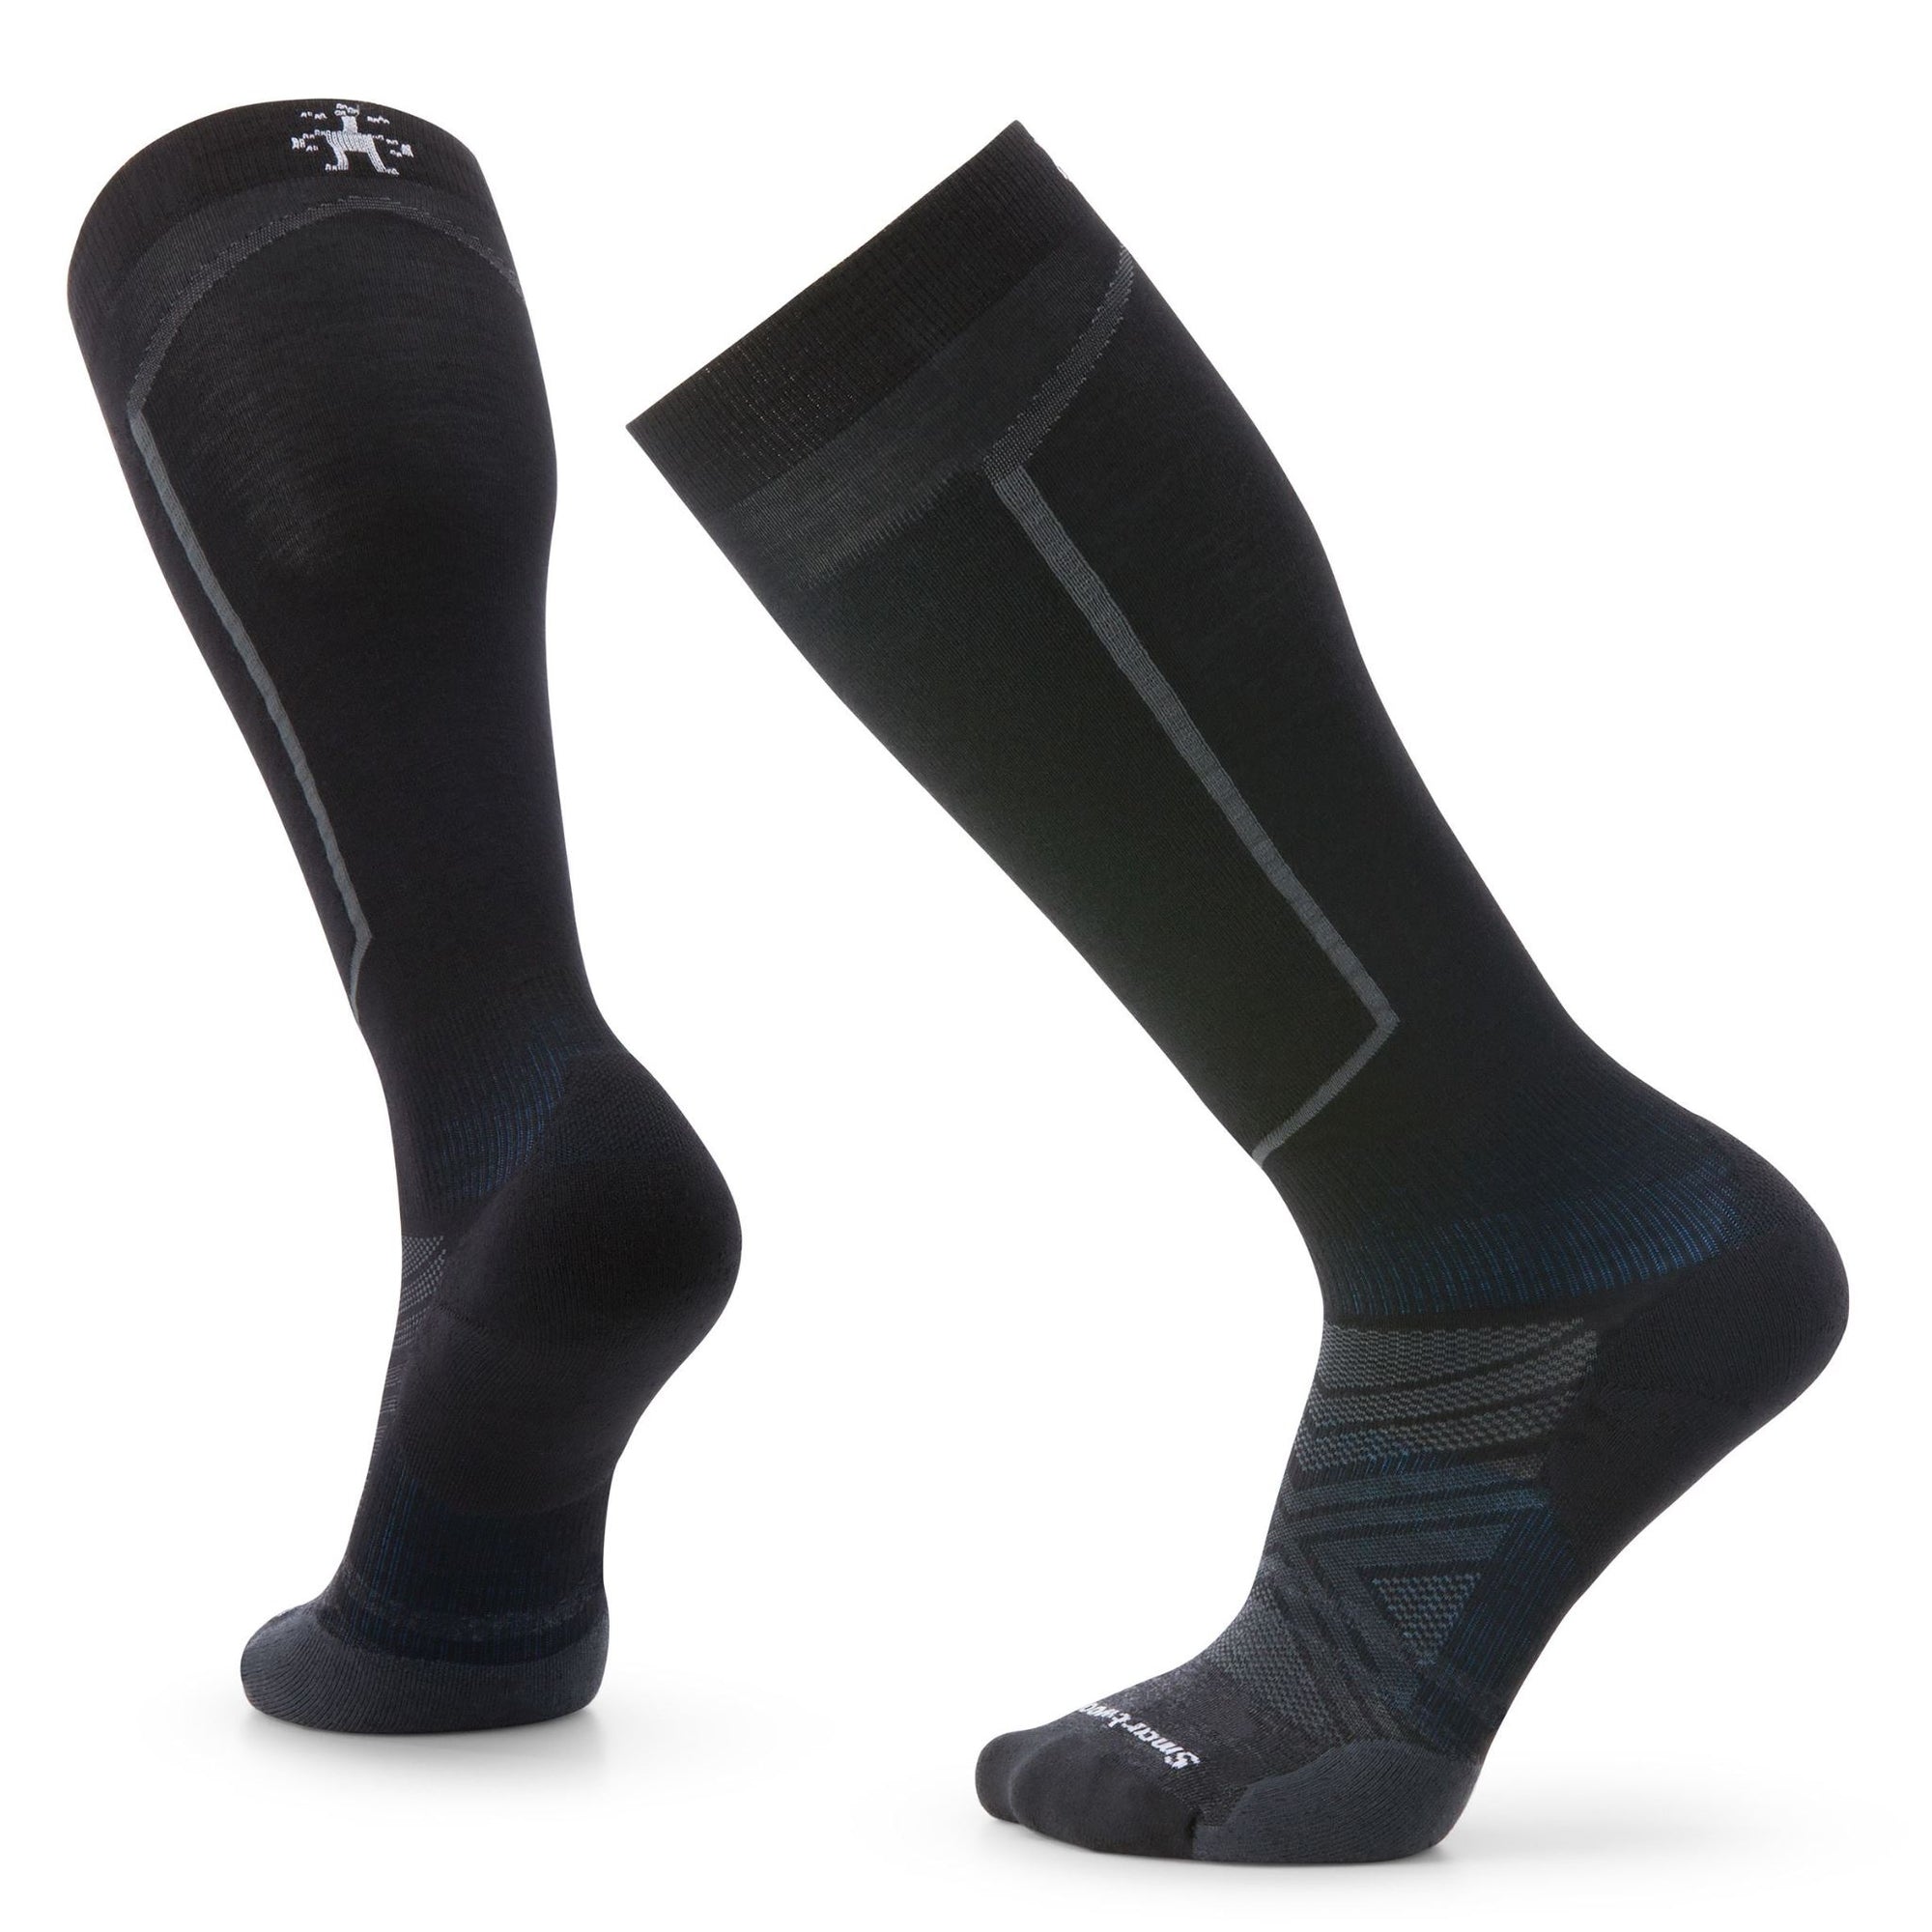 Mens Smartwool Ski Full Cushion Socks - Black Socks Smartwool M - (6-8.5US / 38-41 EU) 